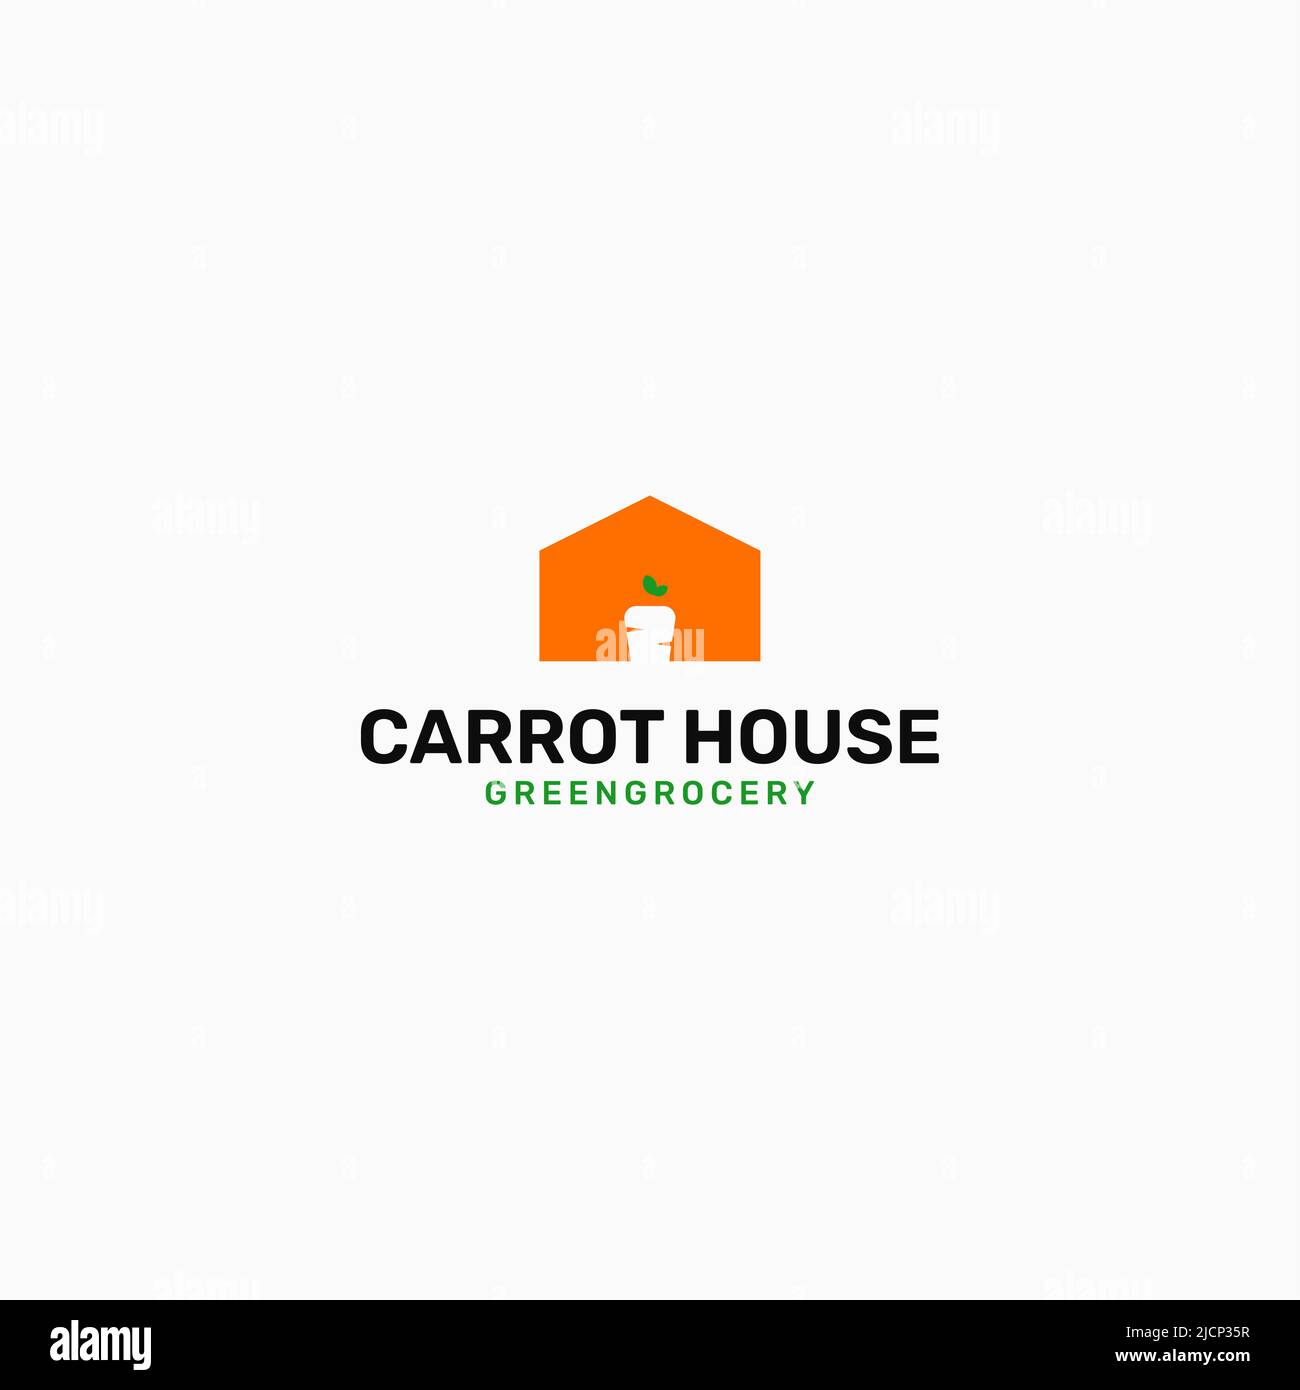 Carrot house logo design. For sellers, suppliers, farmers, market centers, vegetable farm design illustration. Vector graphic illustration. Stock Vector